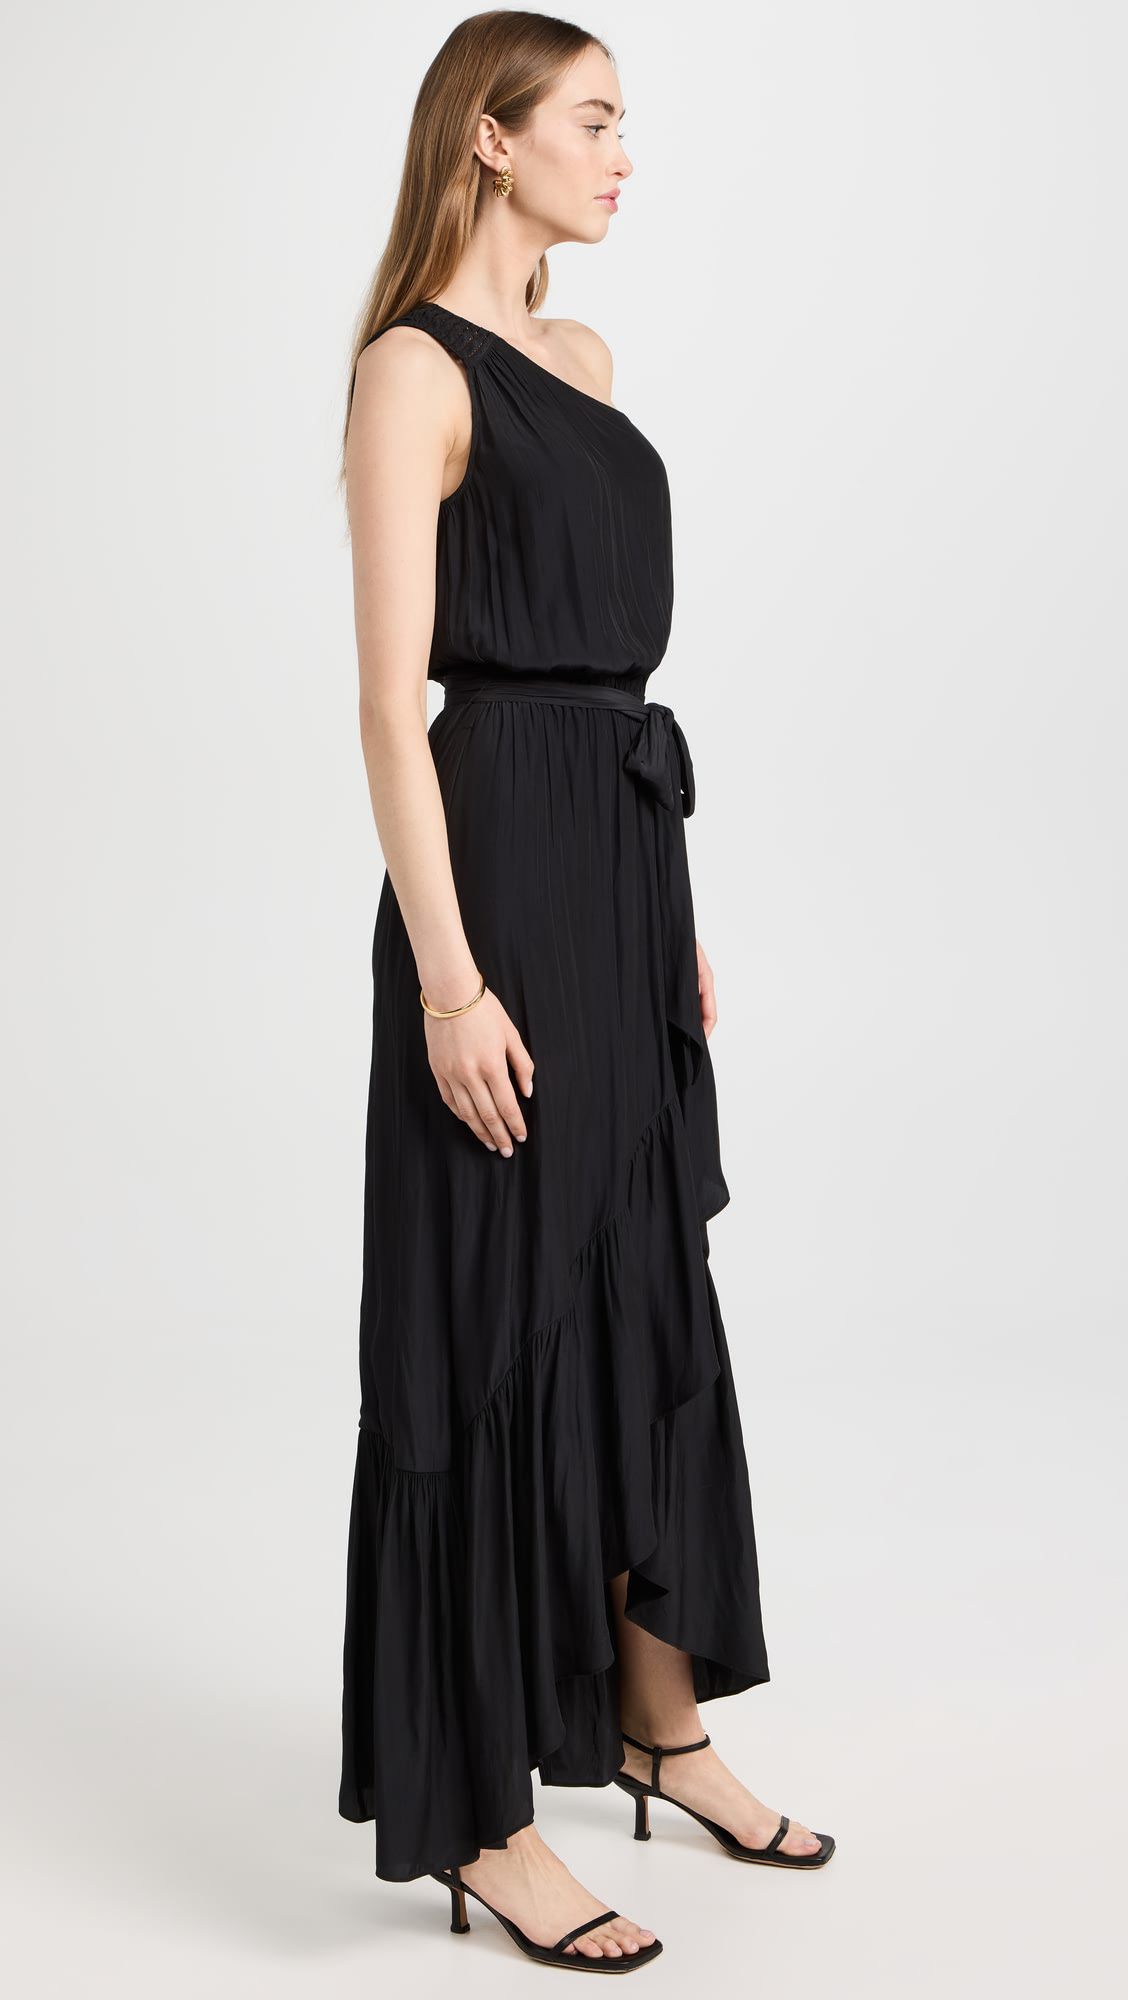 Factory made Asymmetrically pleated elegant black maxi dress